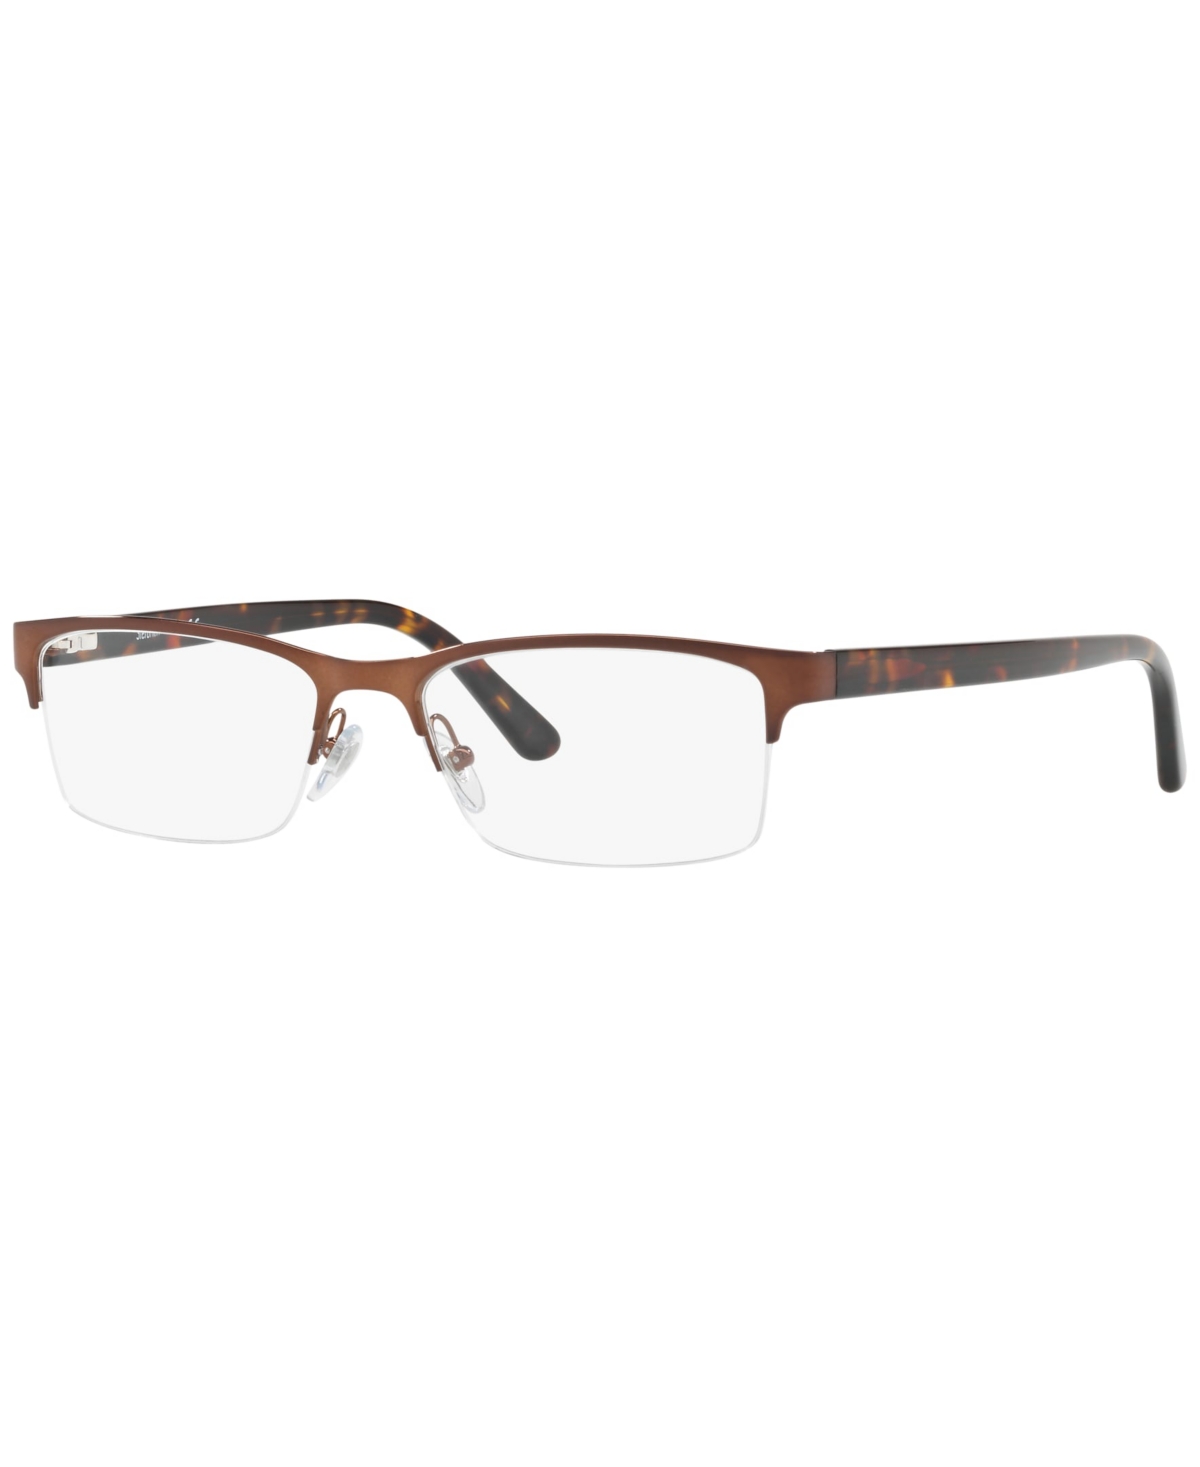 Steroflex Men's Eyeglasses, SF2288 - Dark Brown